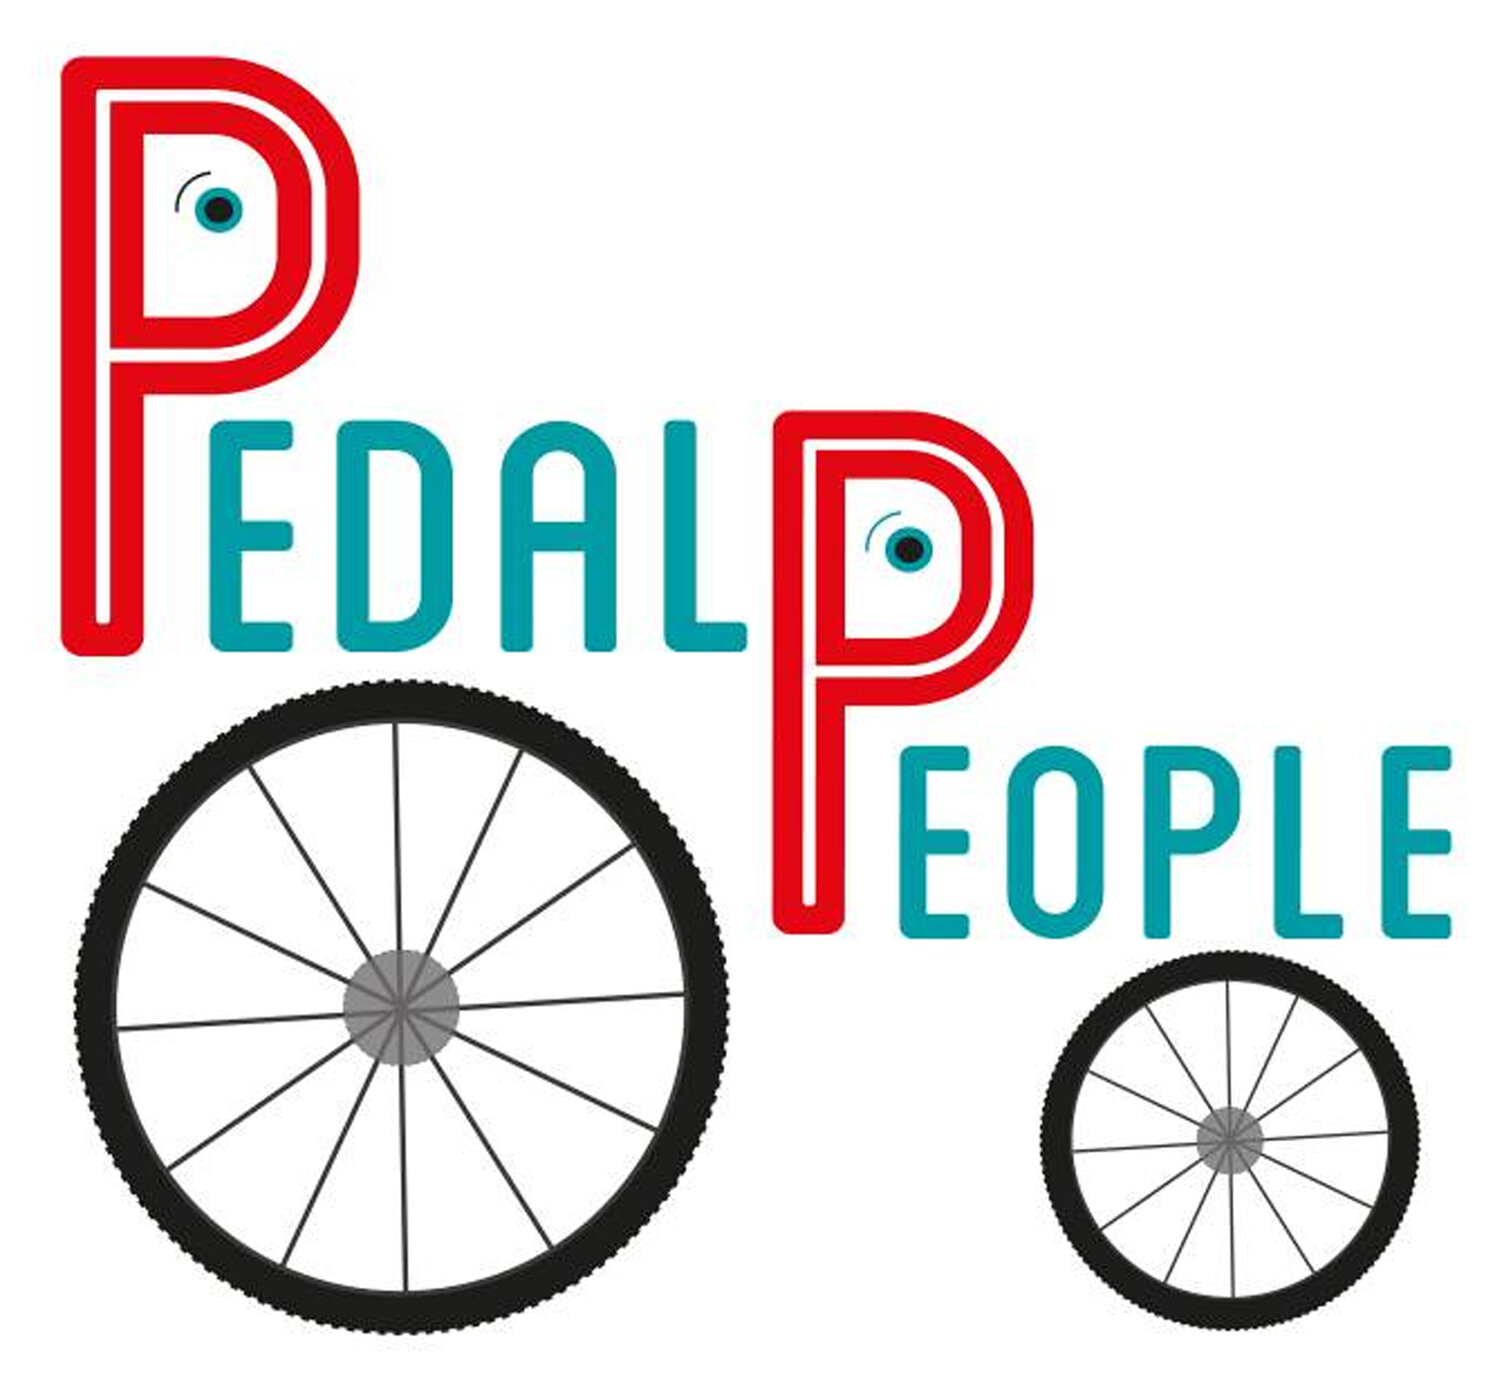 Pedal People